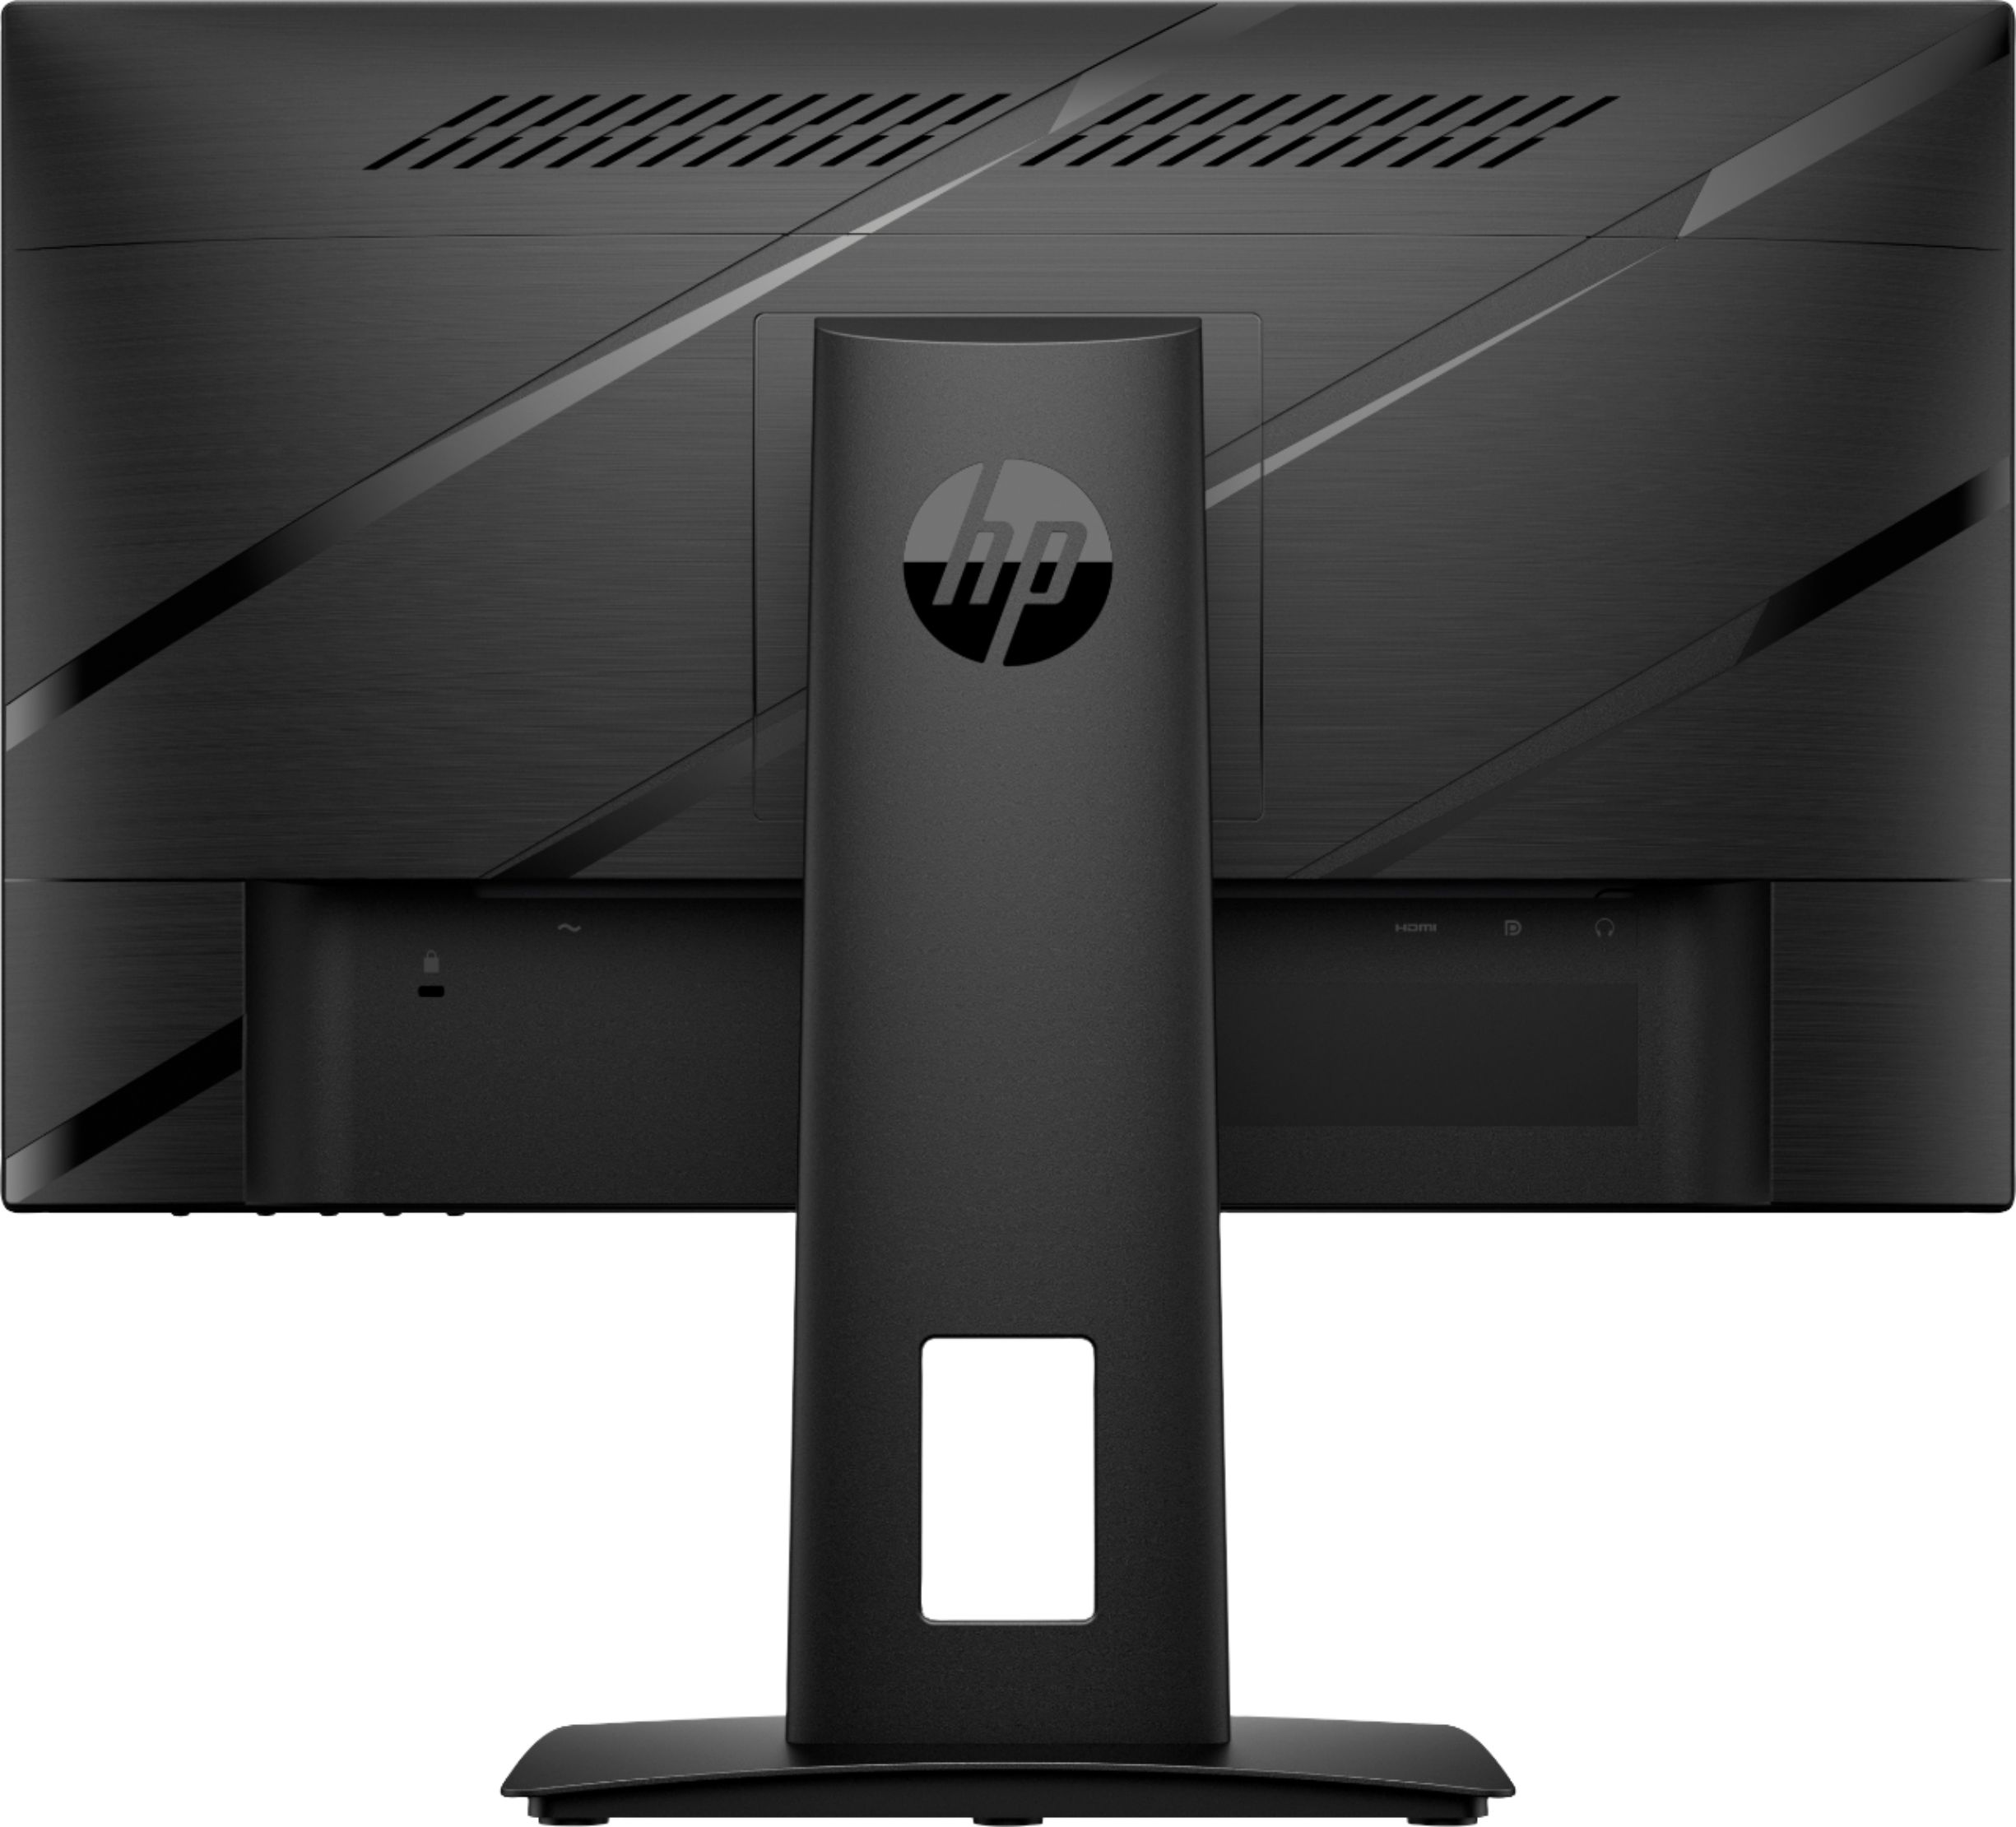 Back View: HP - LaserJet Enterprise M480F Color All-In-One Laser Printer - White